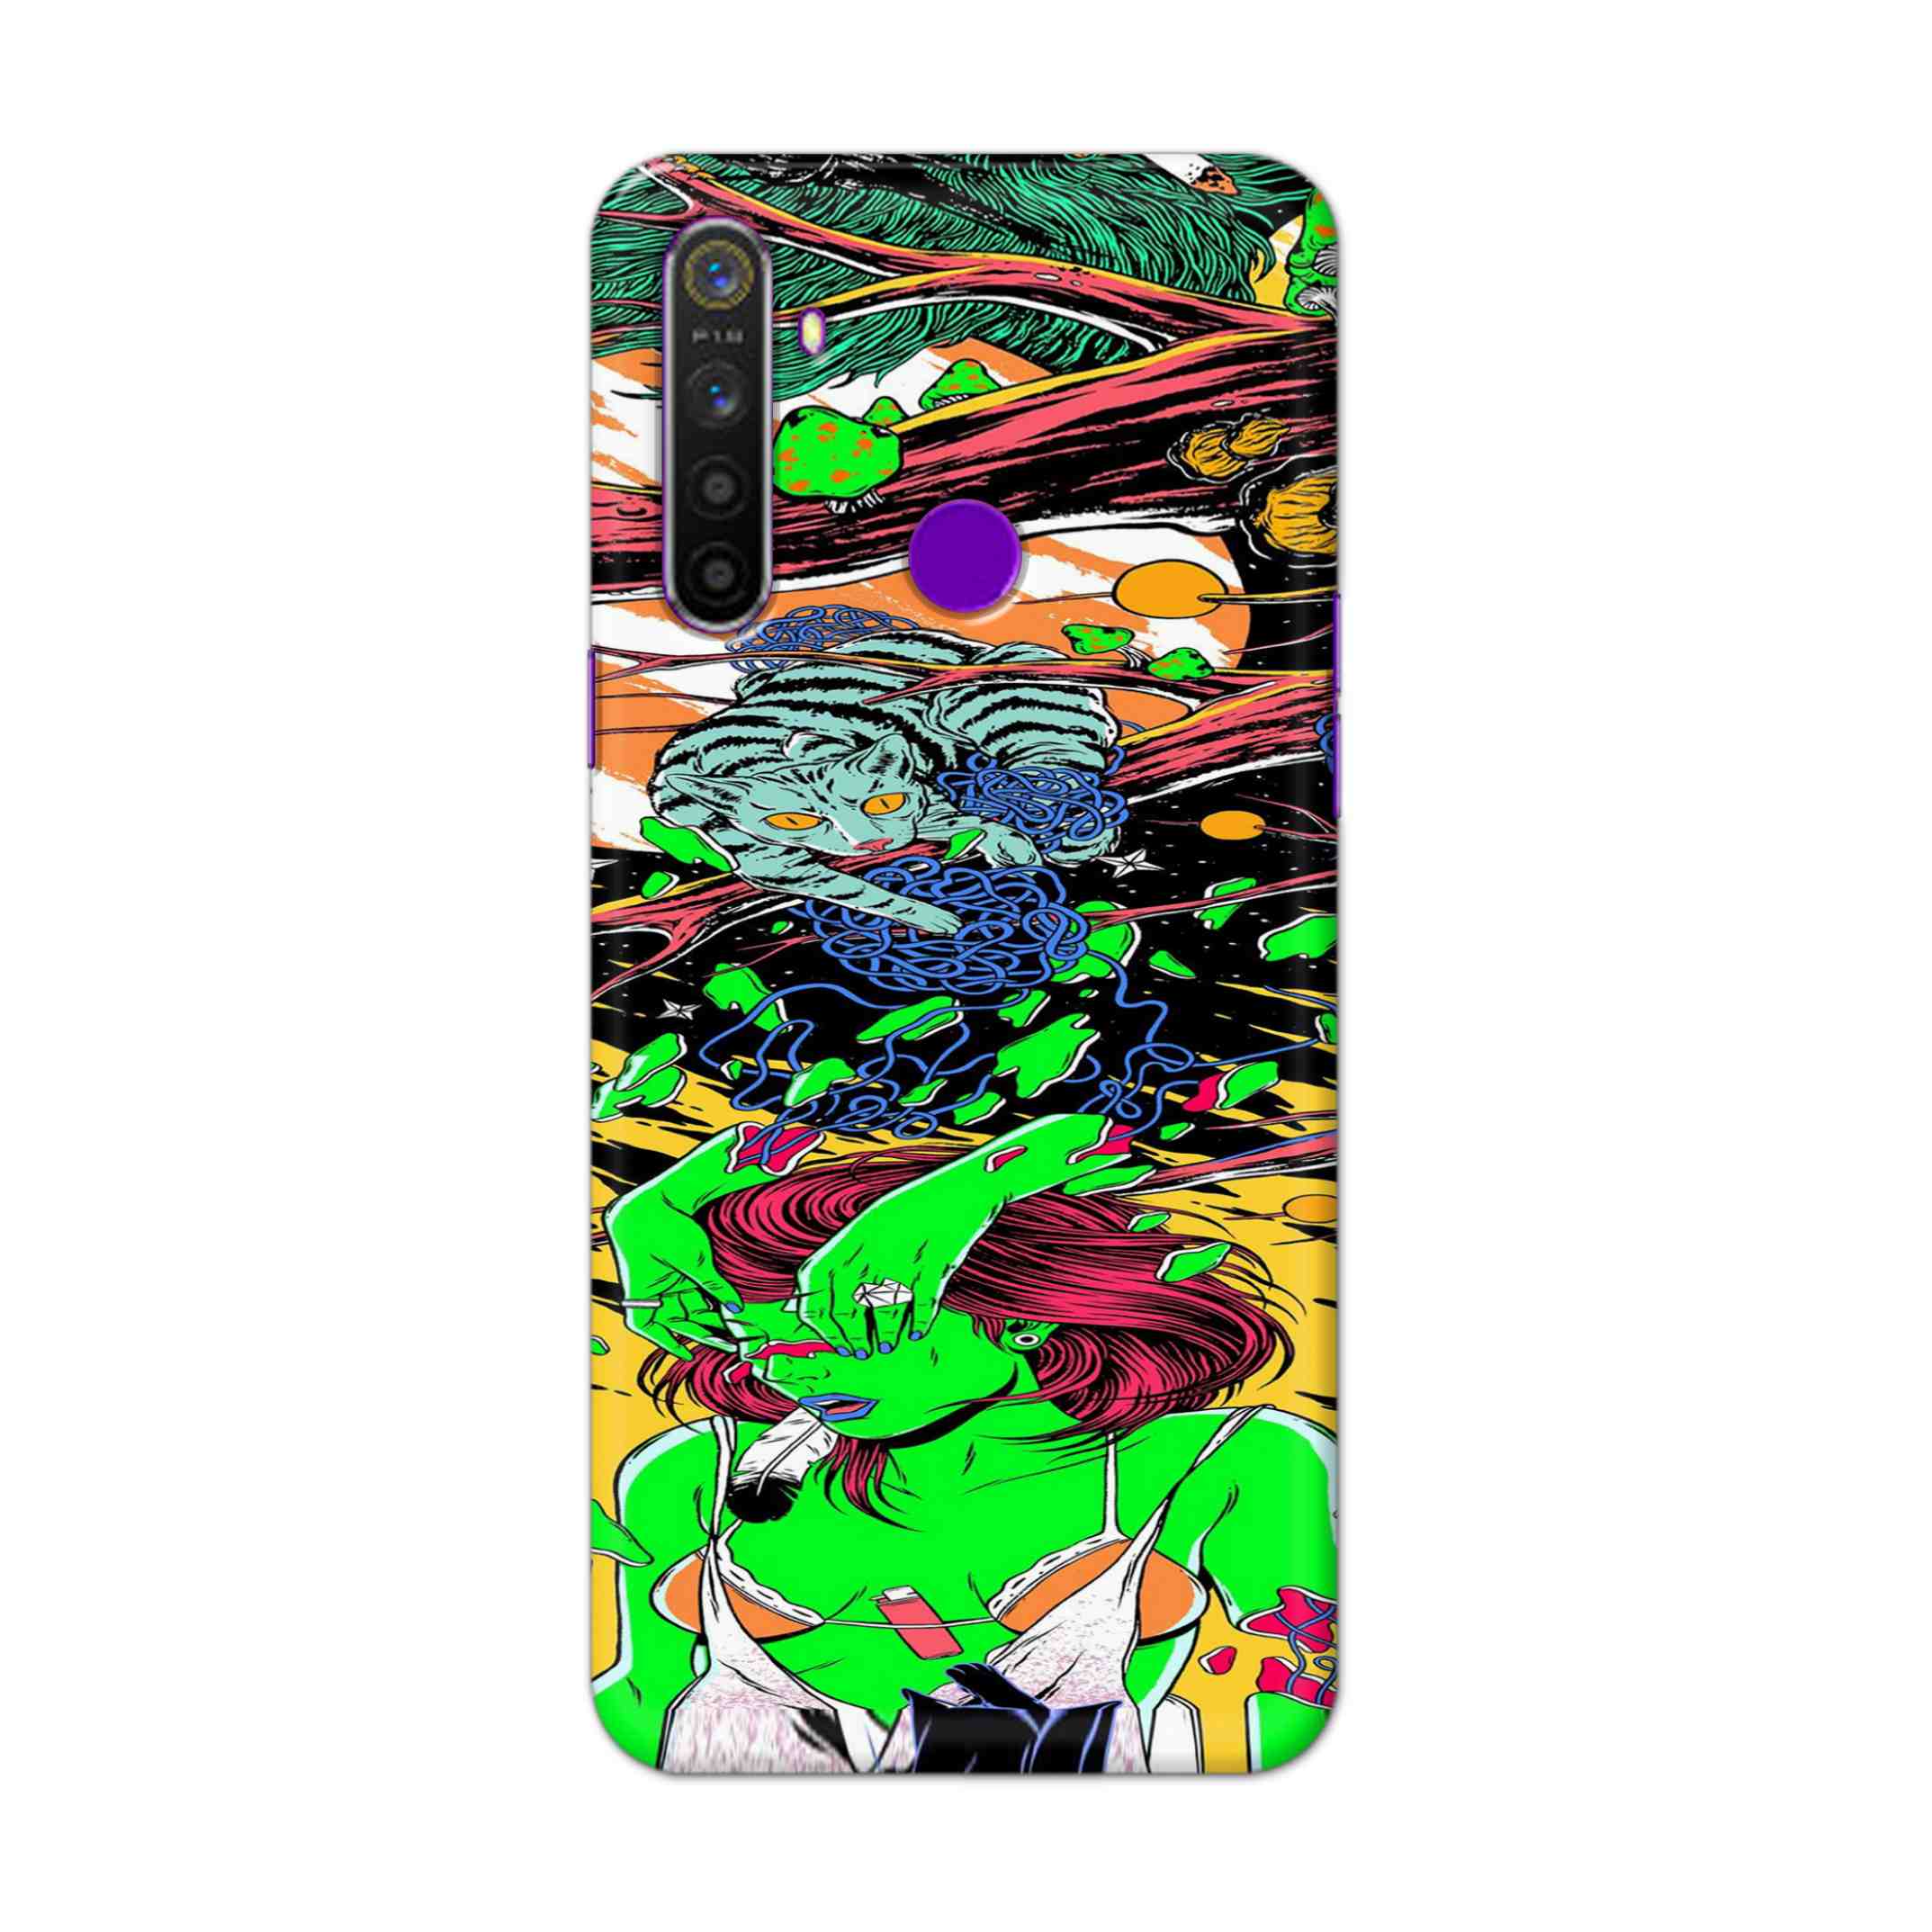 Buy Green Girl Art Hard Back Mobile Phone Case Cover For Realme 5 Online